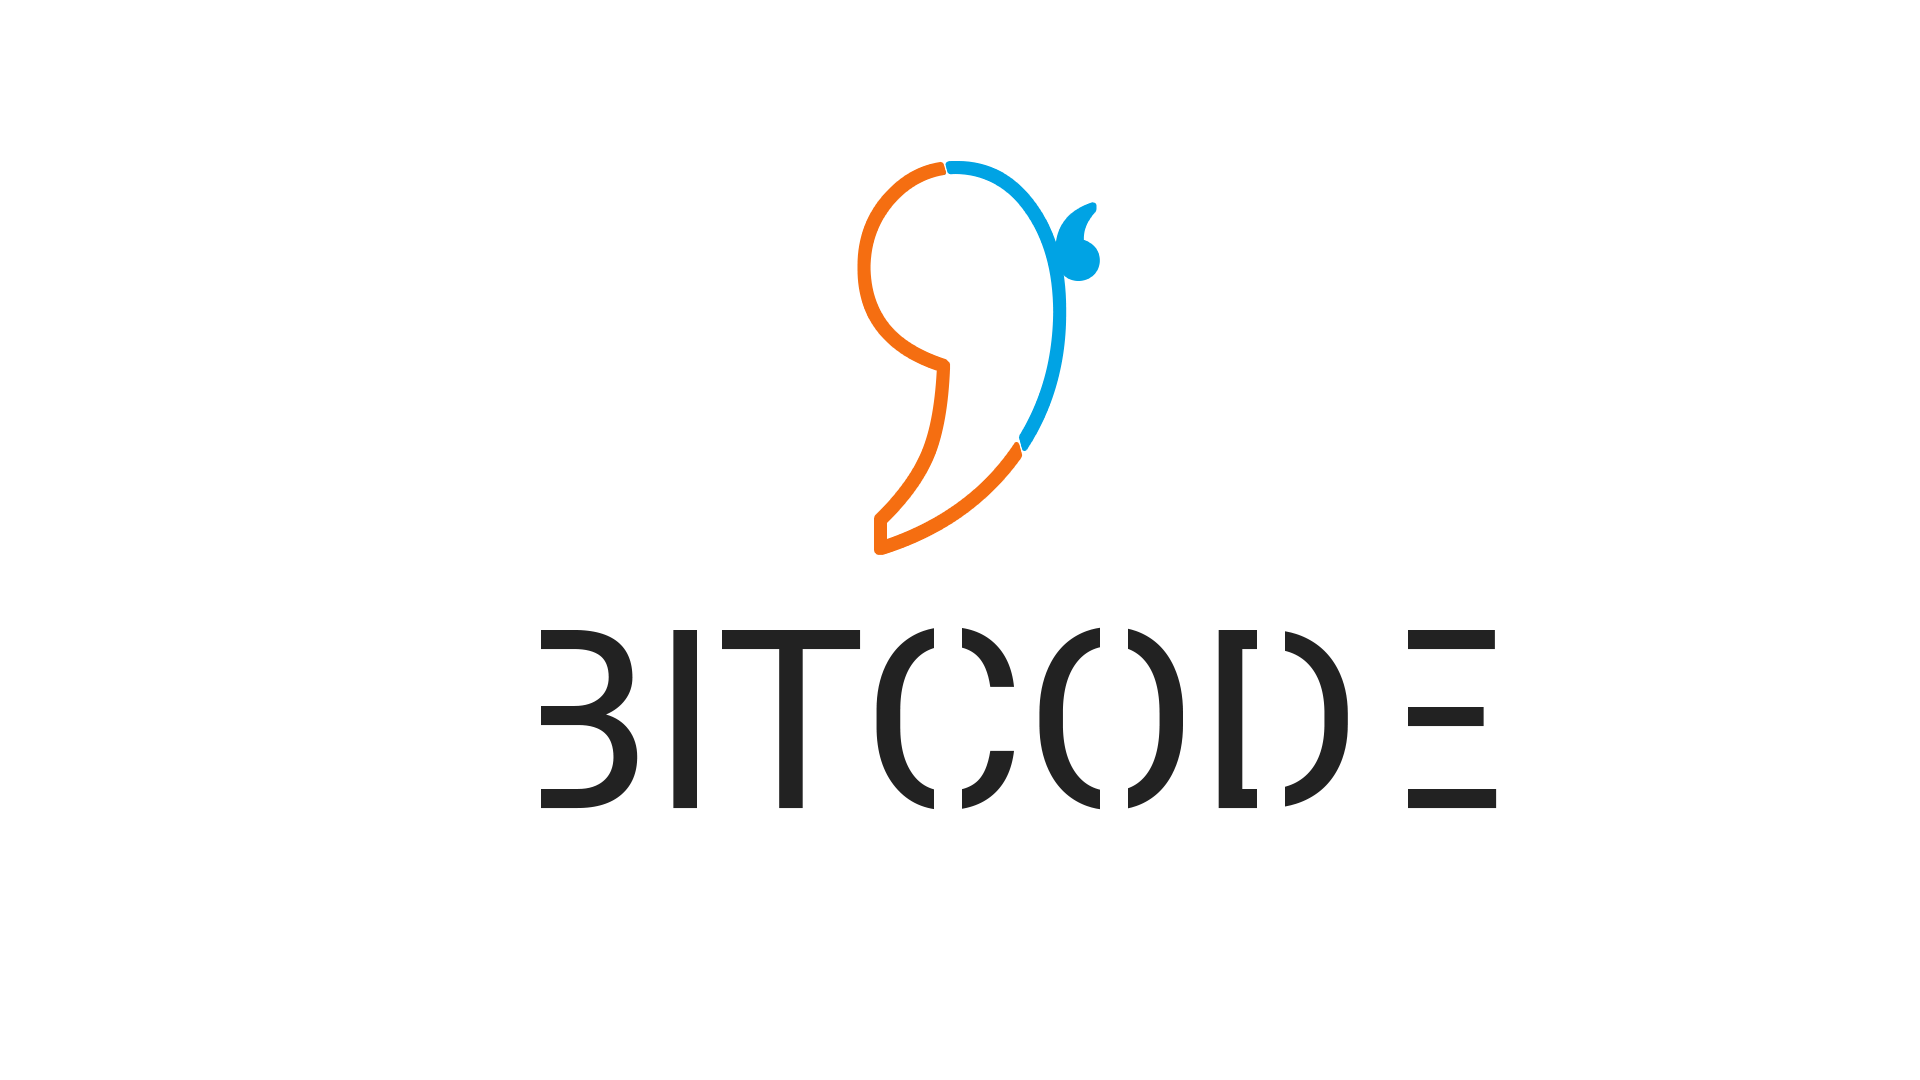 Bitcode